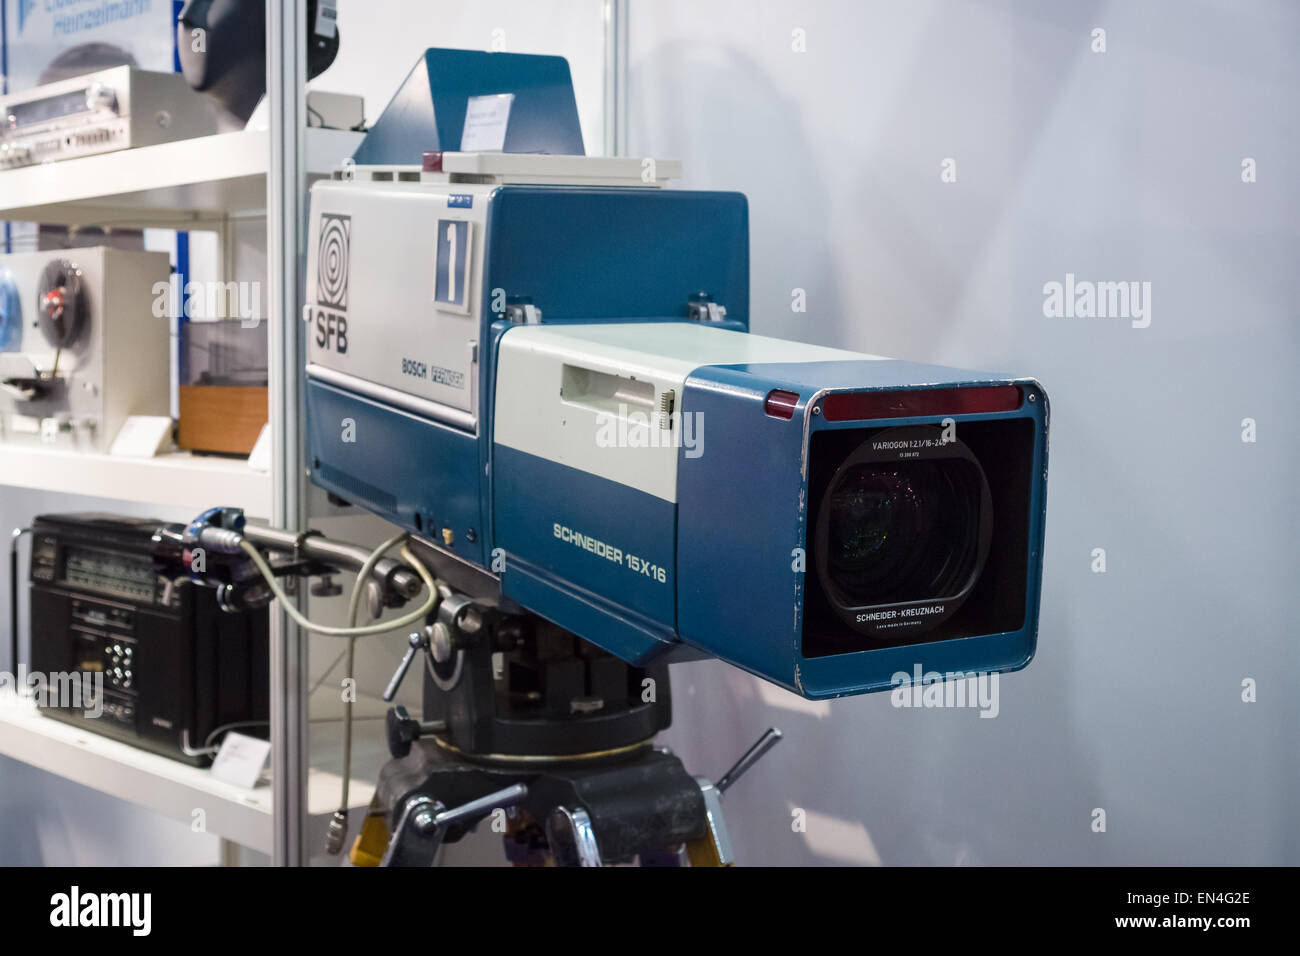 Bosch KCU-40 television camera with Schneider 15x16 Stock Photo